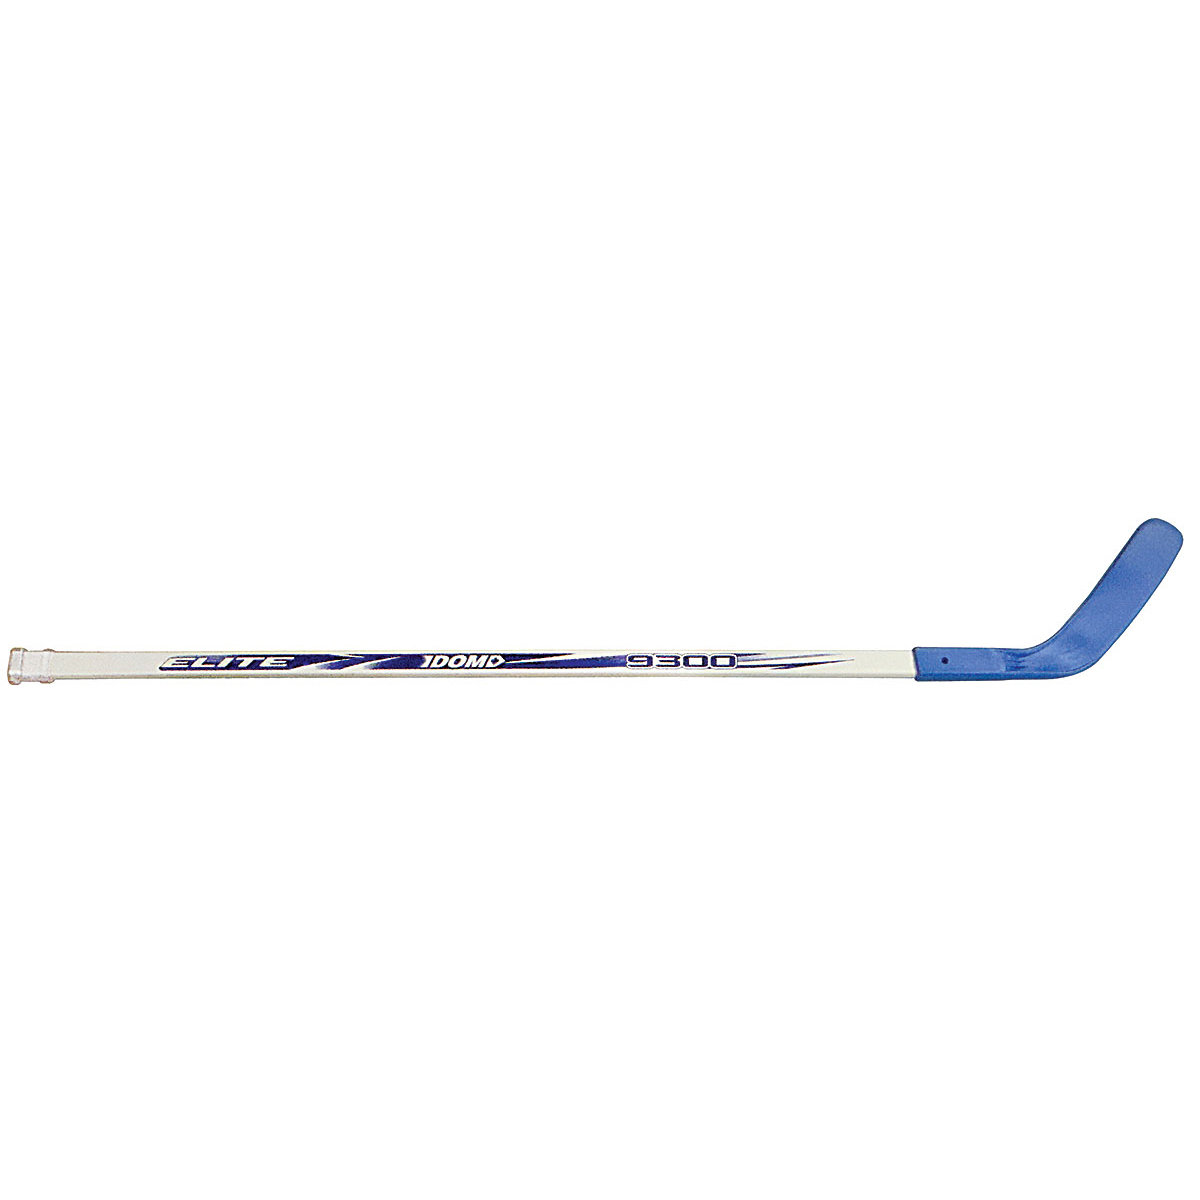 54" DOM replacement hockey stick w/ BLUE blade